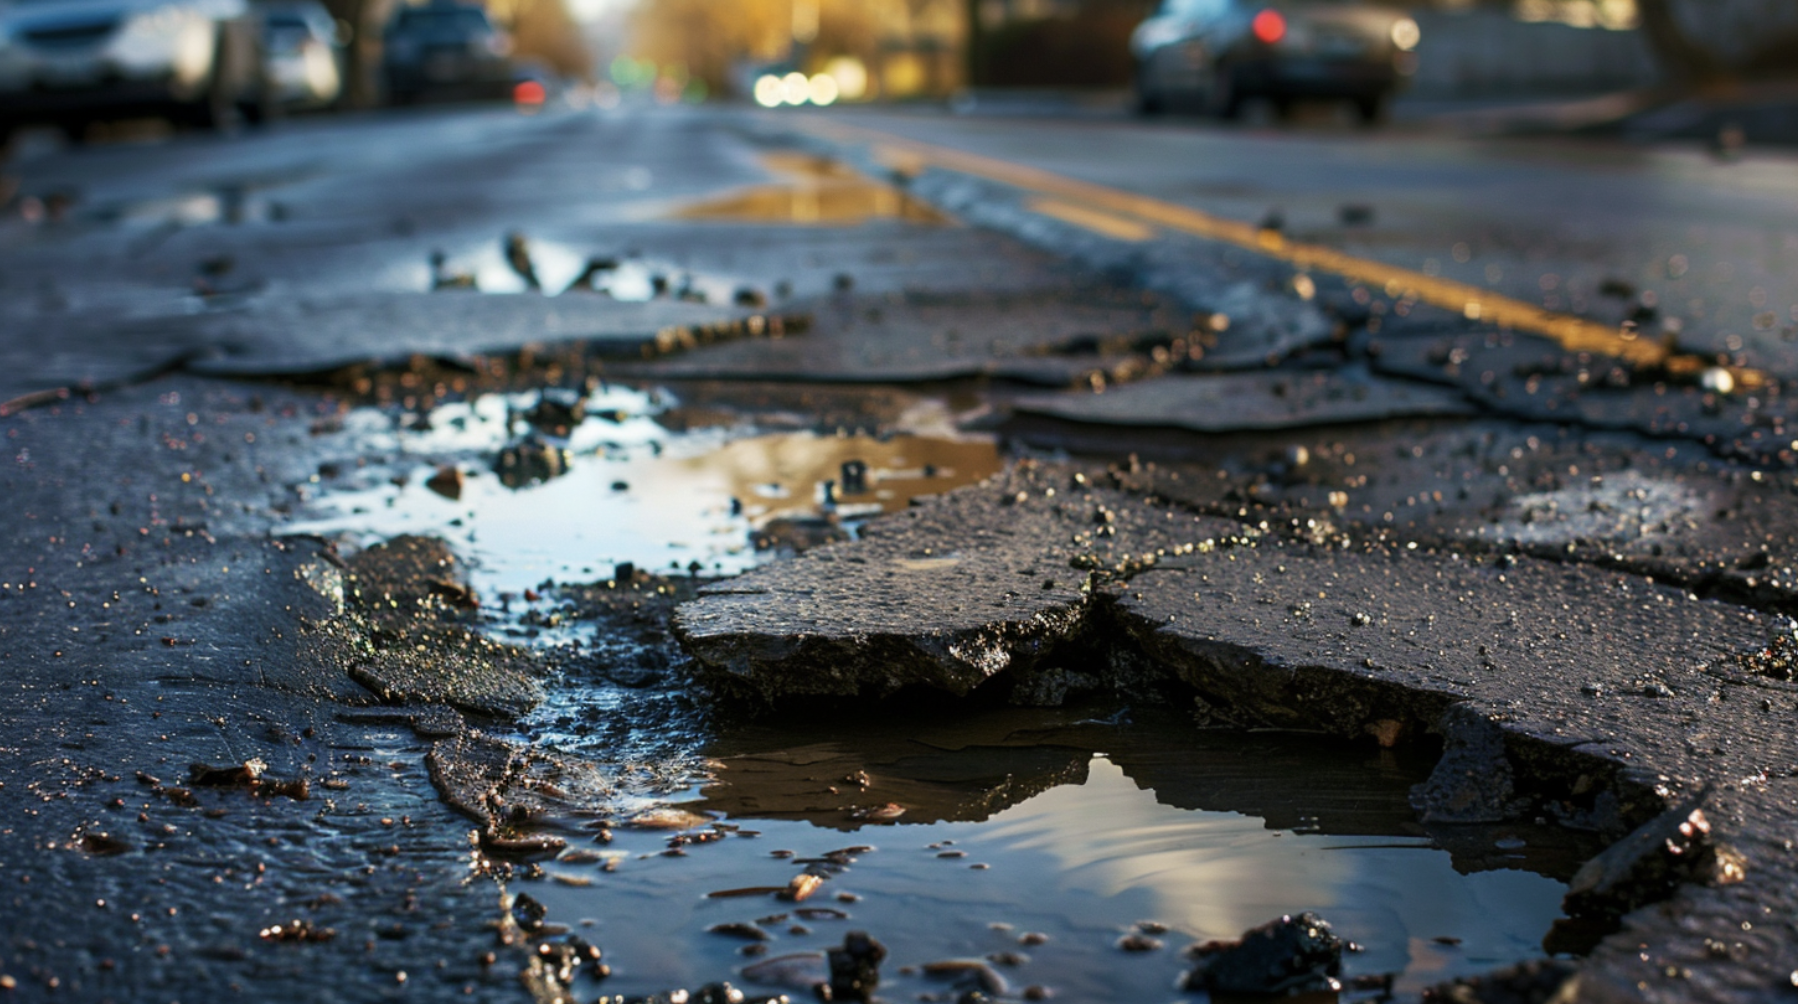 Impact from Potholes or Road Debris